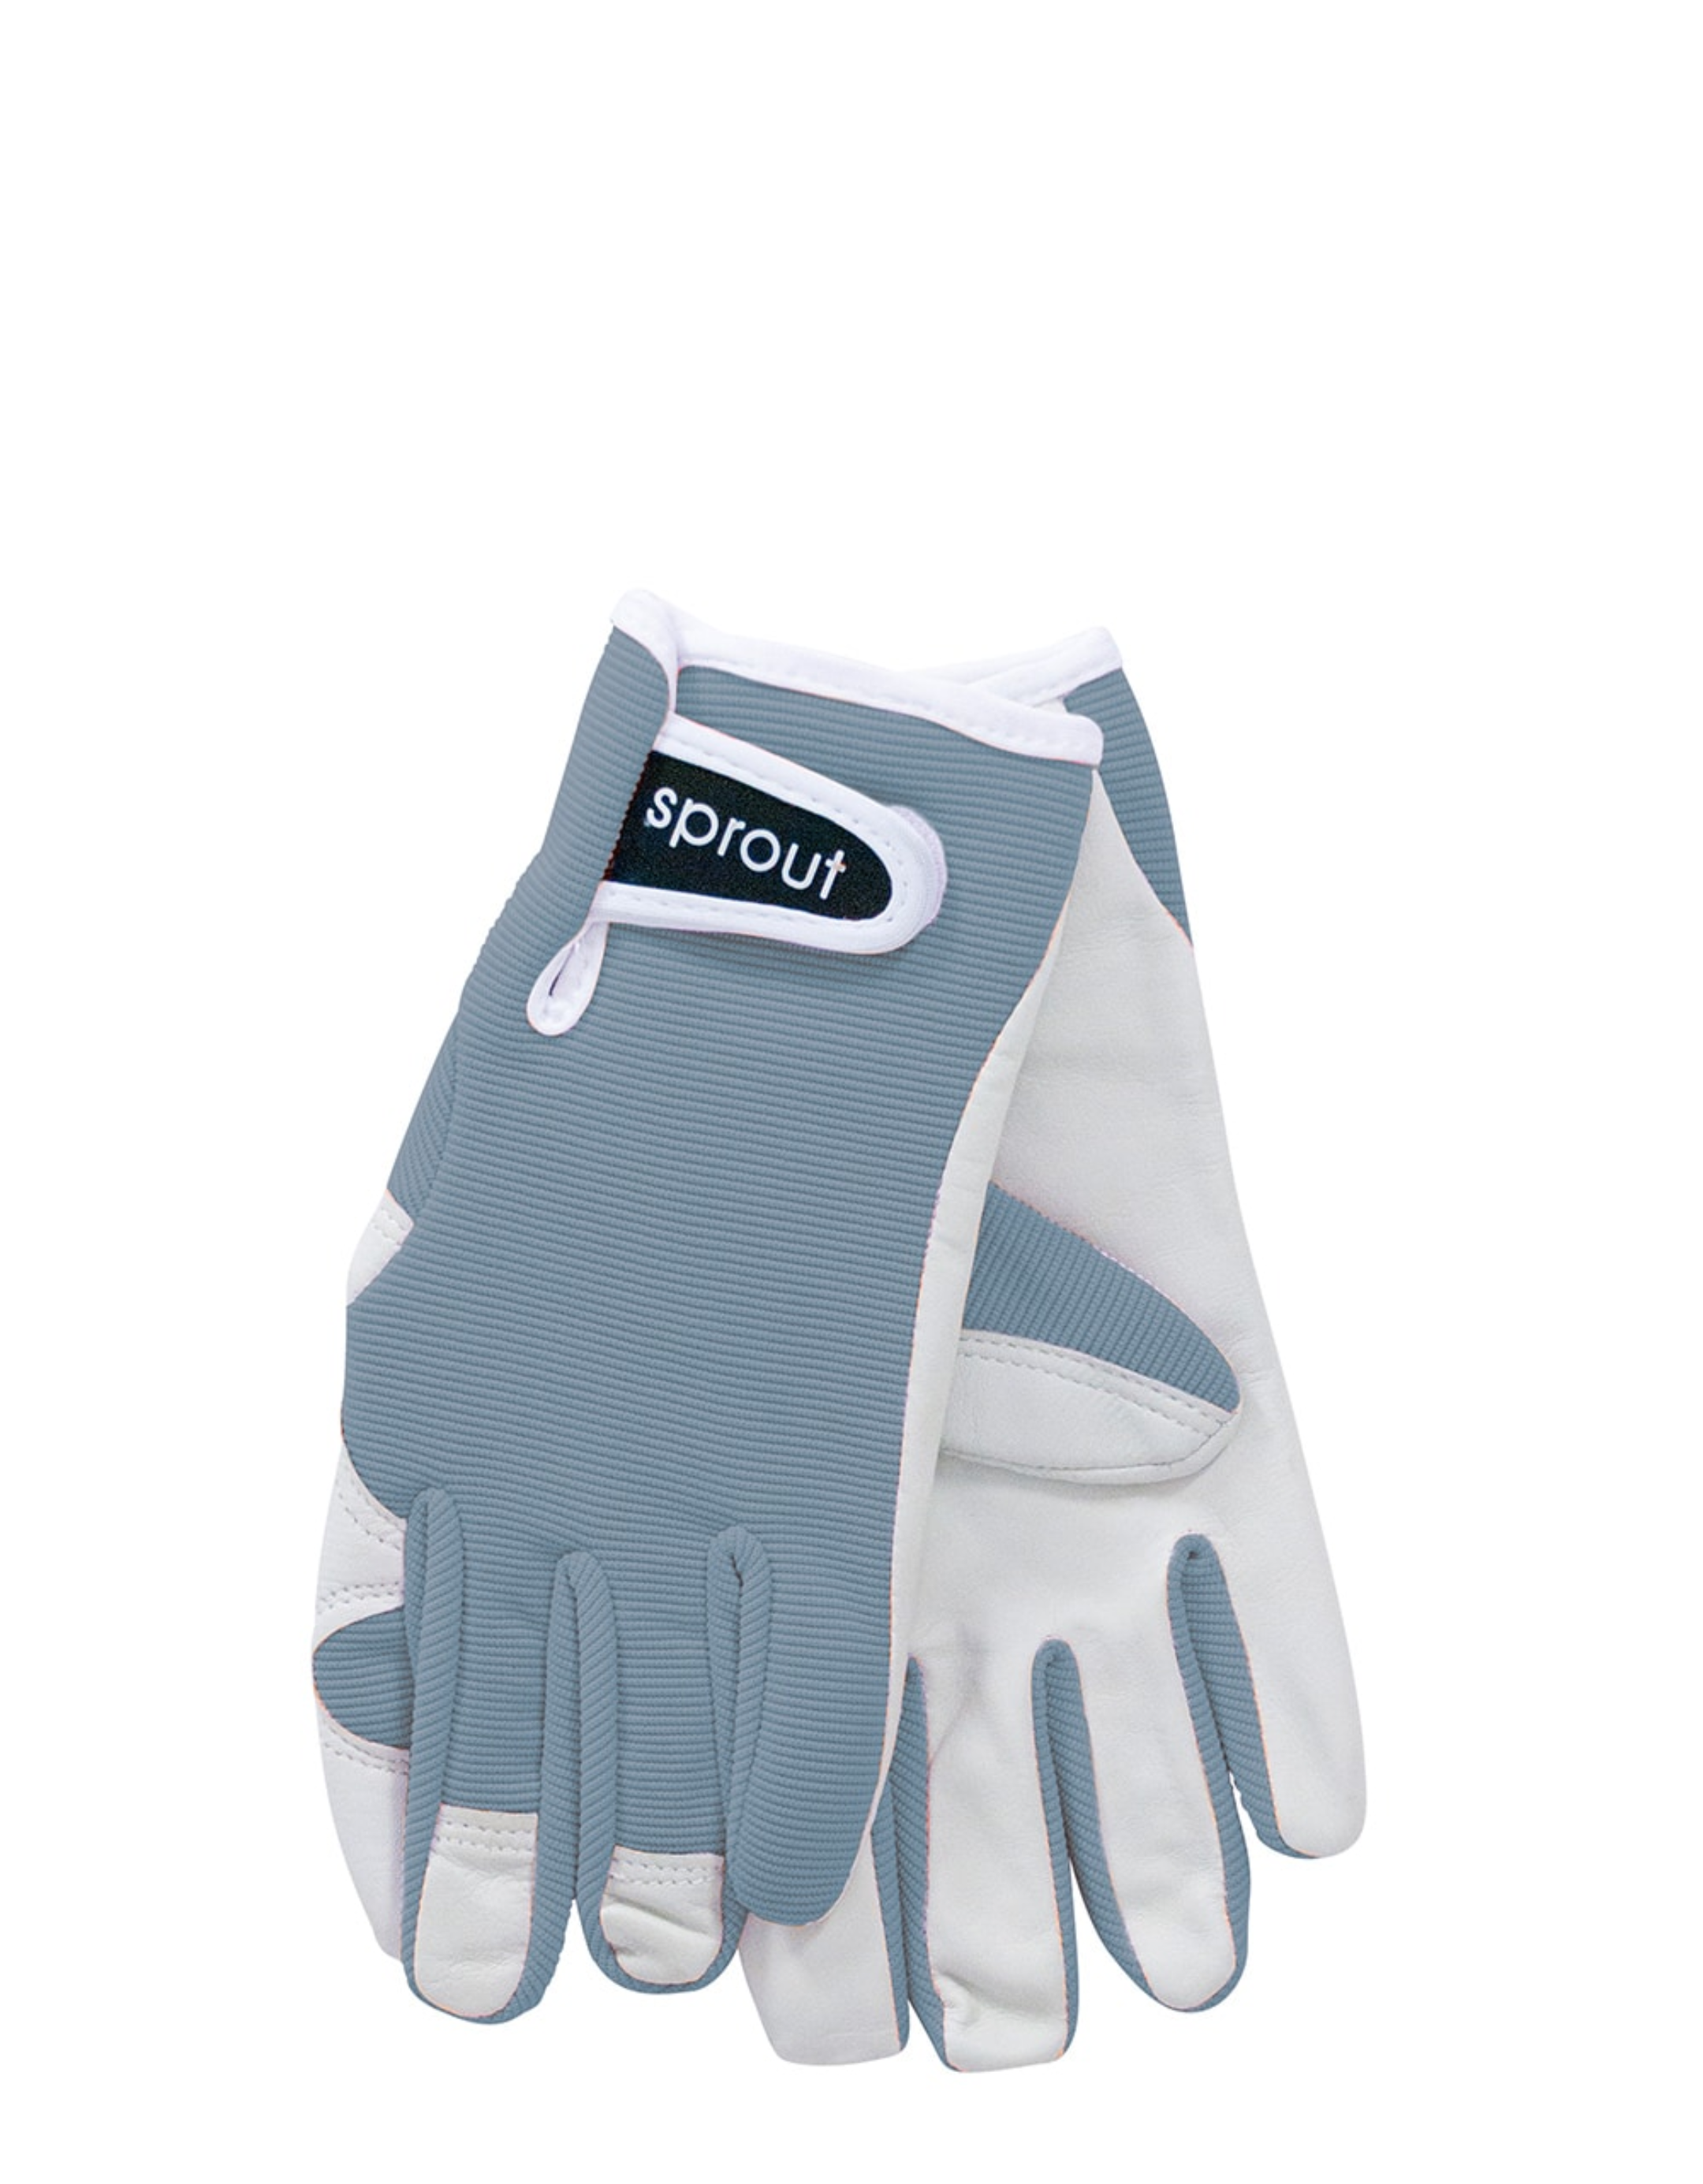 Sprout Goatskin Gloves